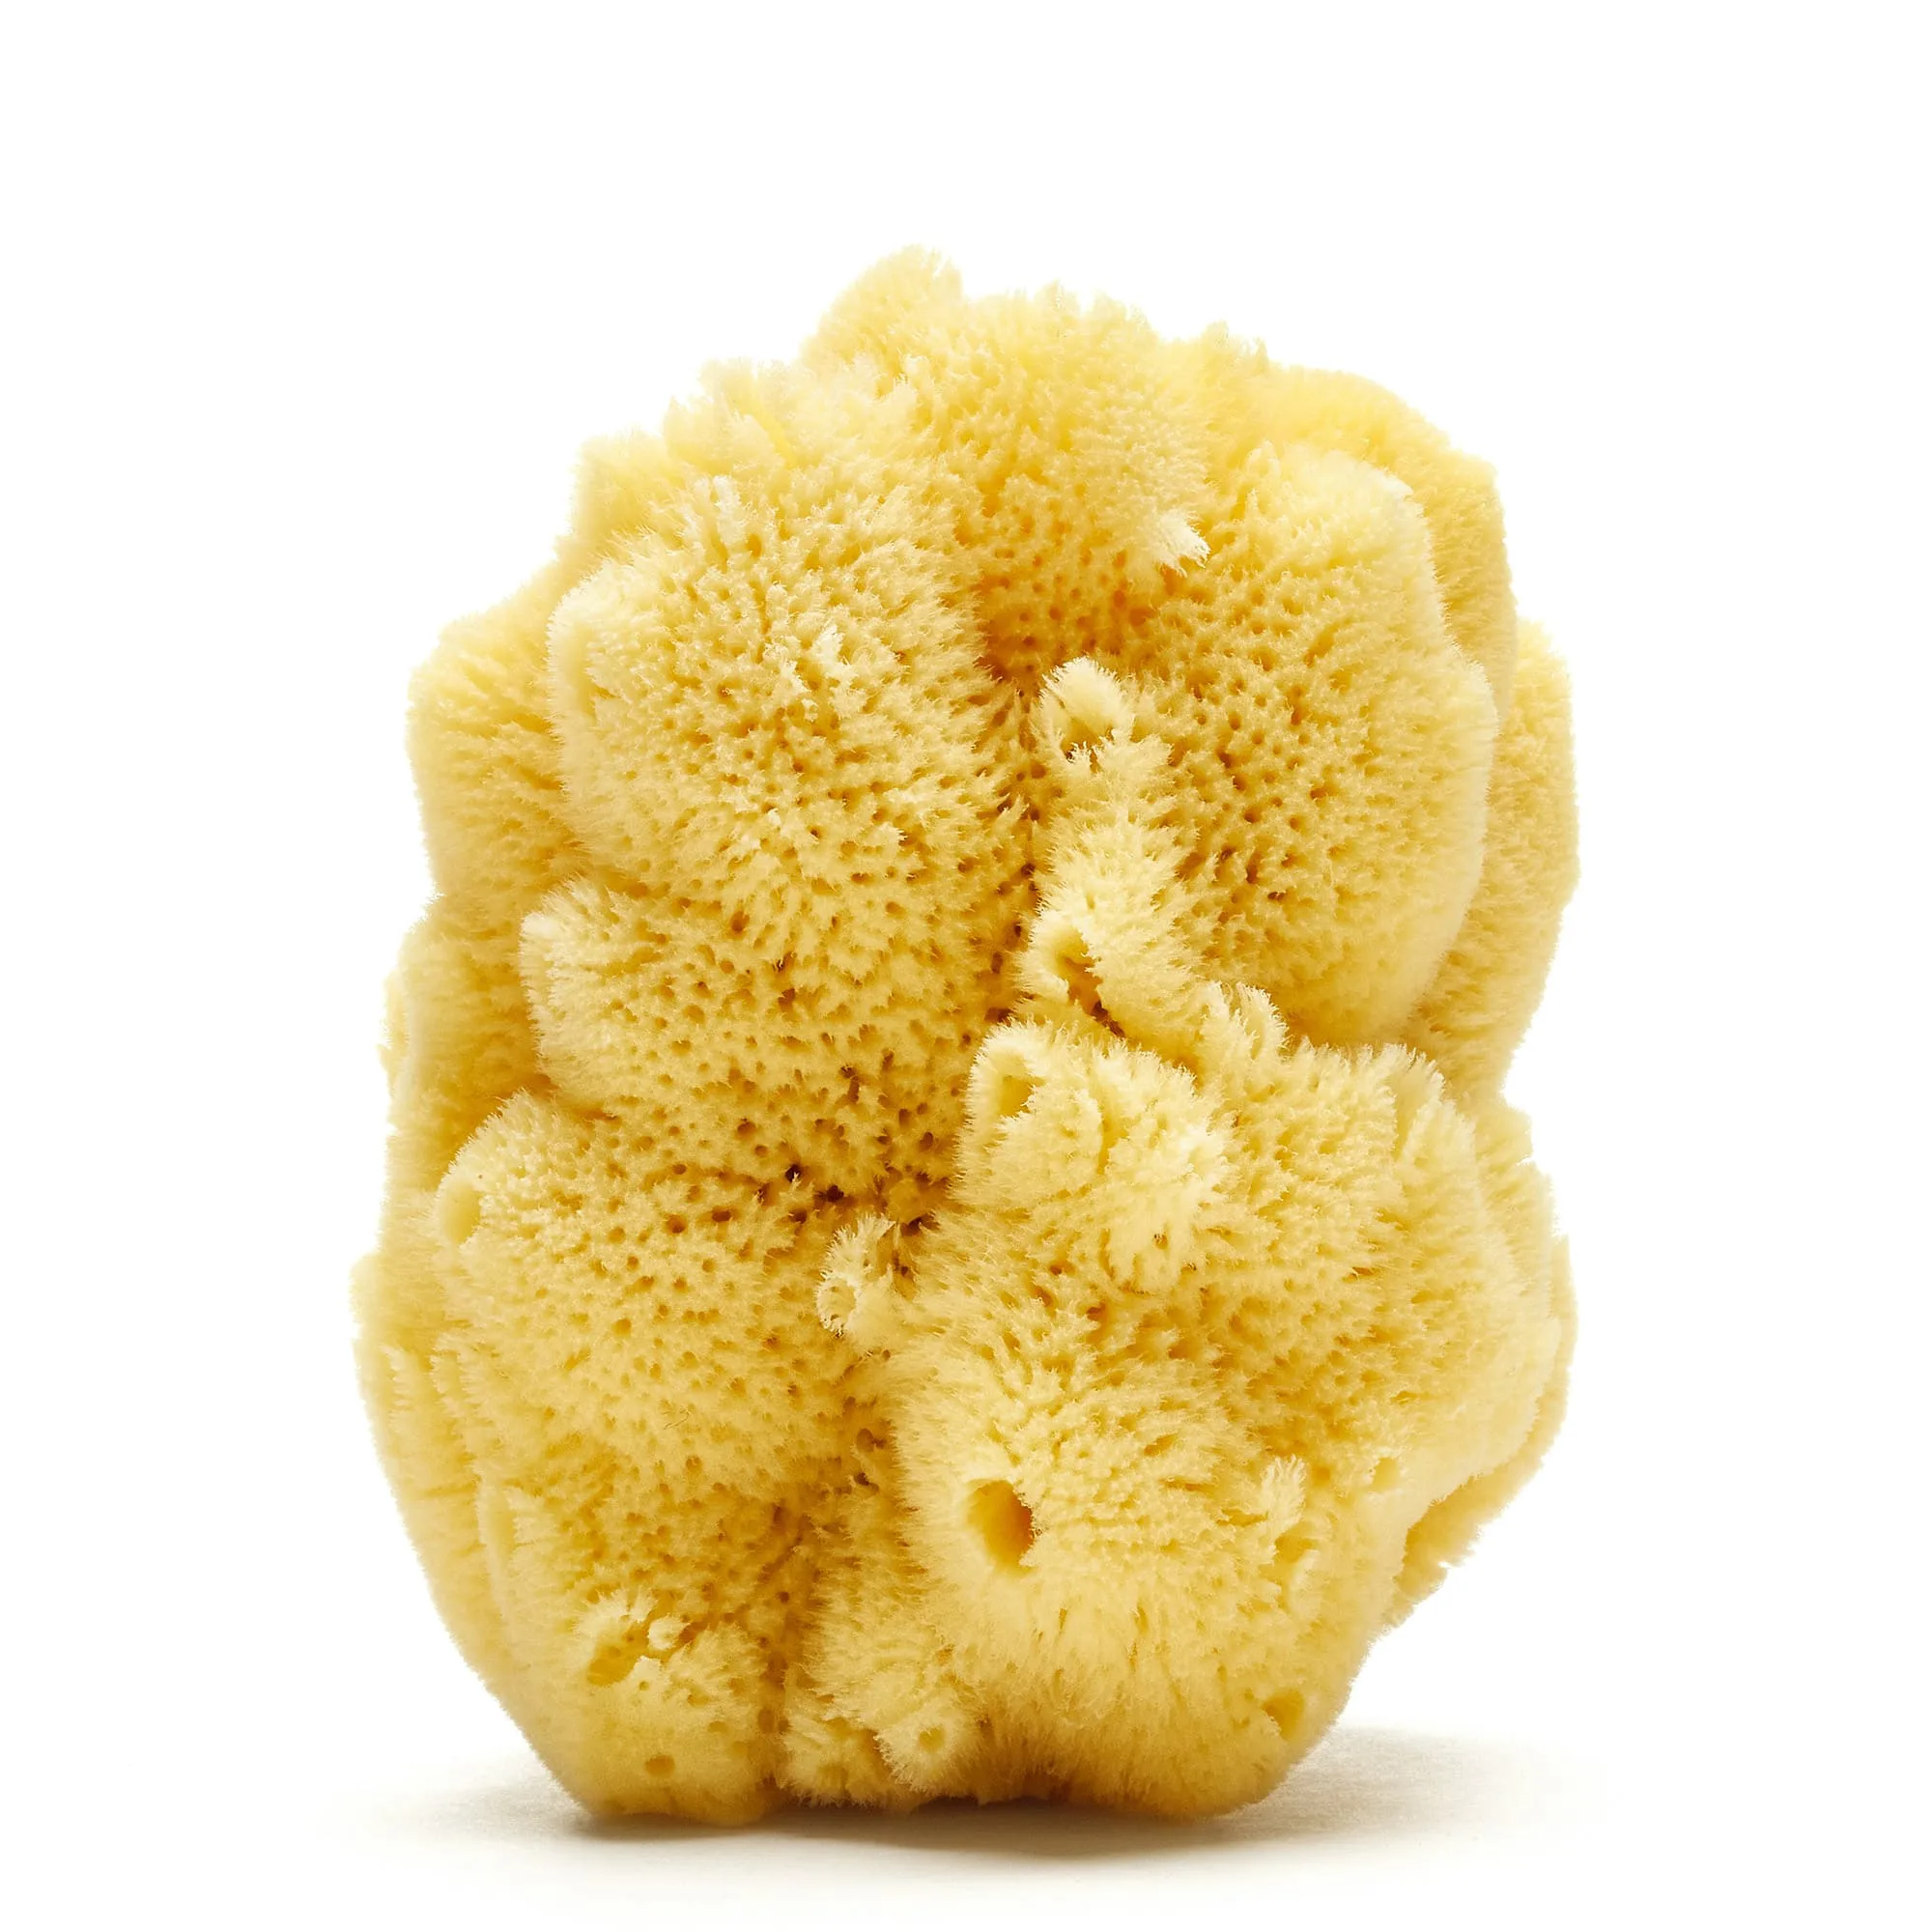 We sell Natural Sea Sponges Worldwide in bulk